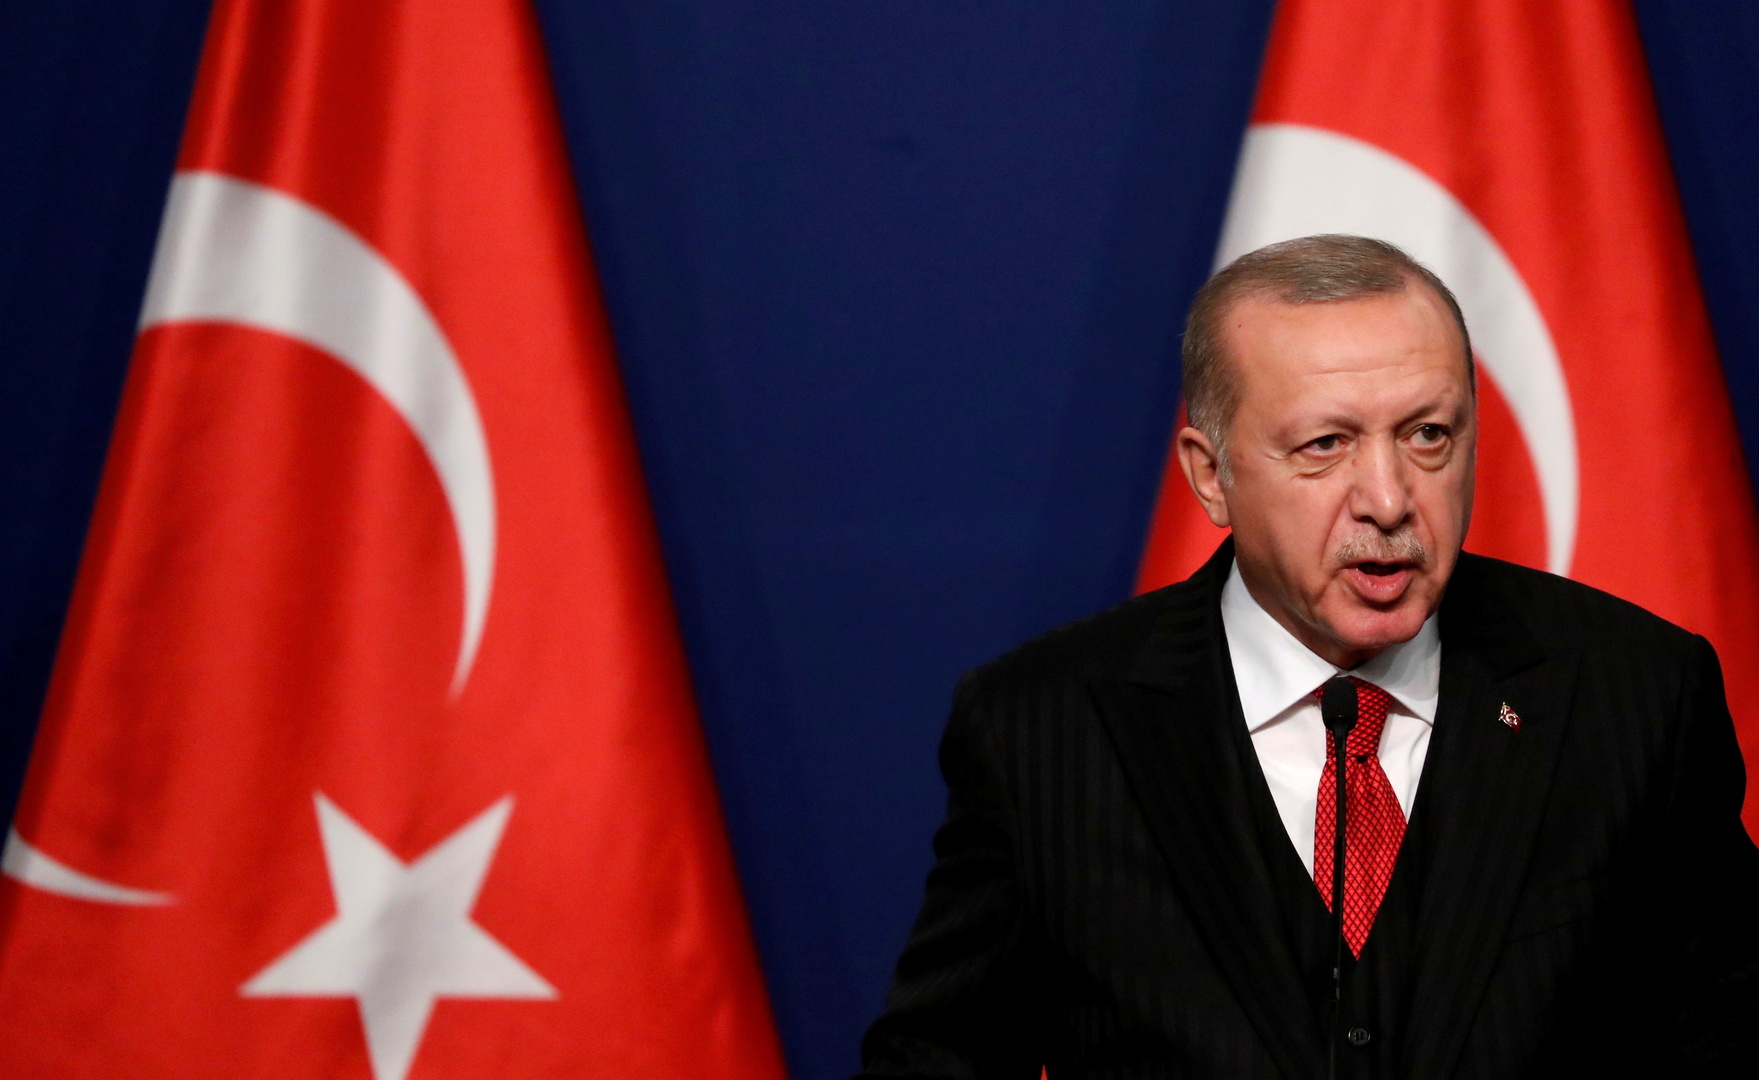 أردوغان: تركيا تجمعها علاقات قوية مع مصر